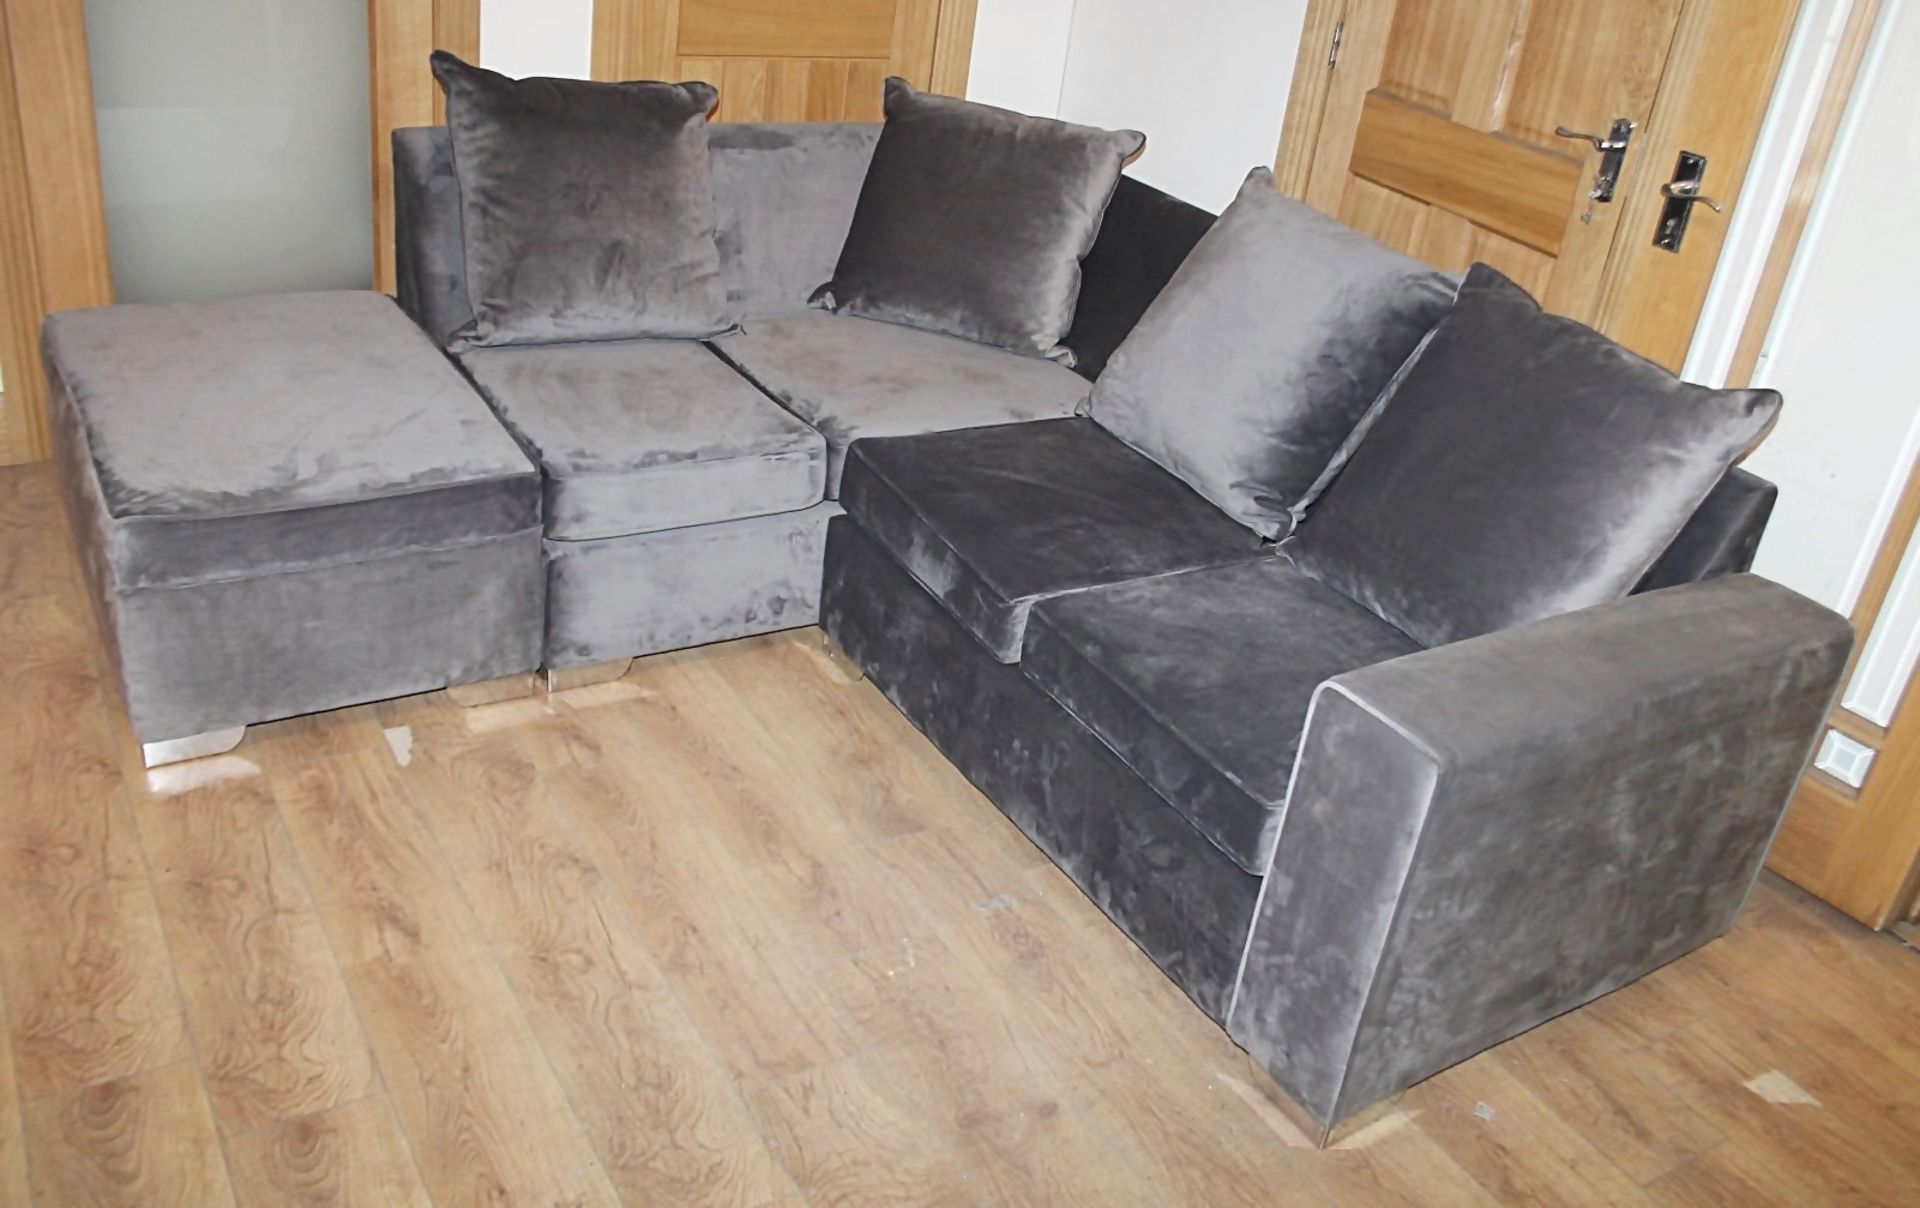 1 x Velvet Upholstered 2-Metre Corner Sofa In A Shimmering Grey Tone - Ex-Showroom Example - Ref: